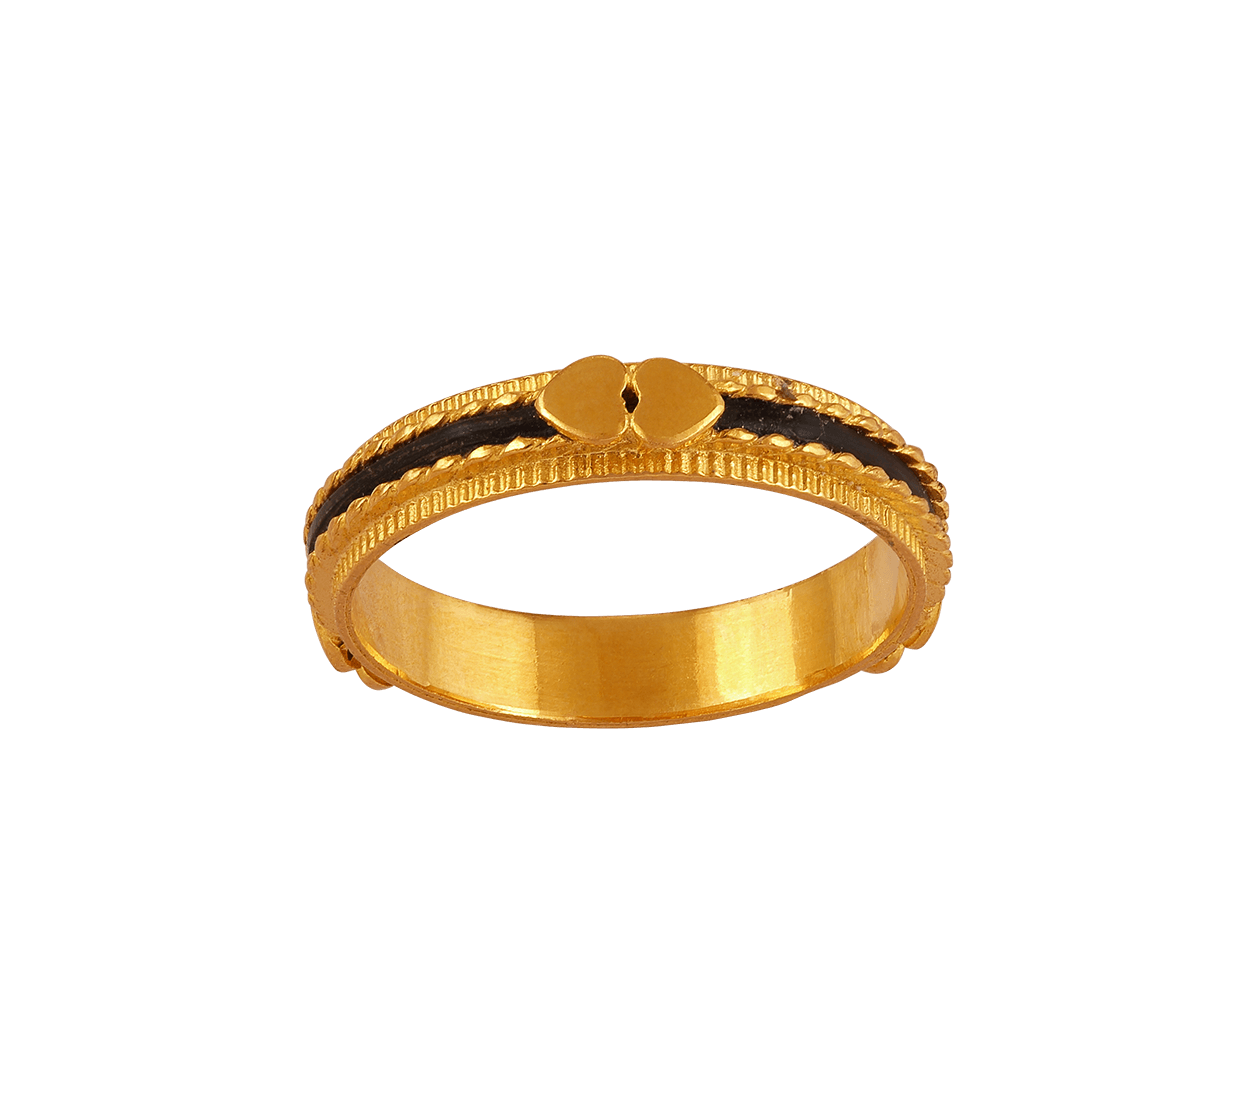 Bhima Jewellers 22k Gold Bracelet for Men 91g  Amazonin Jewellery